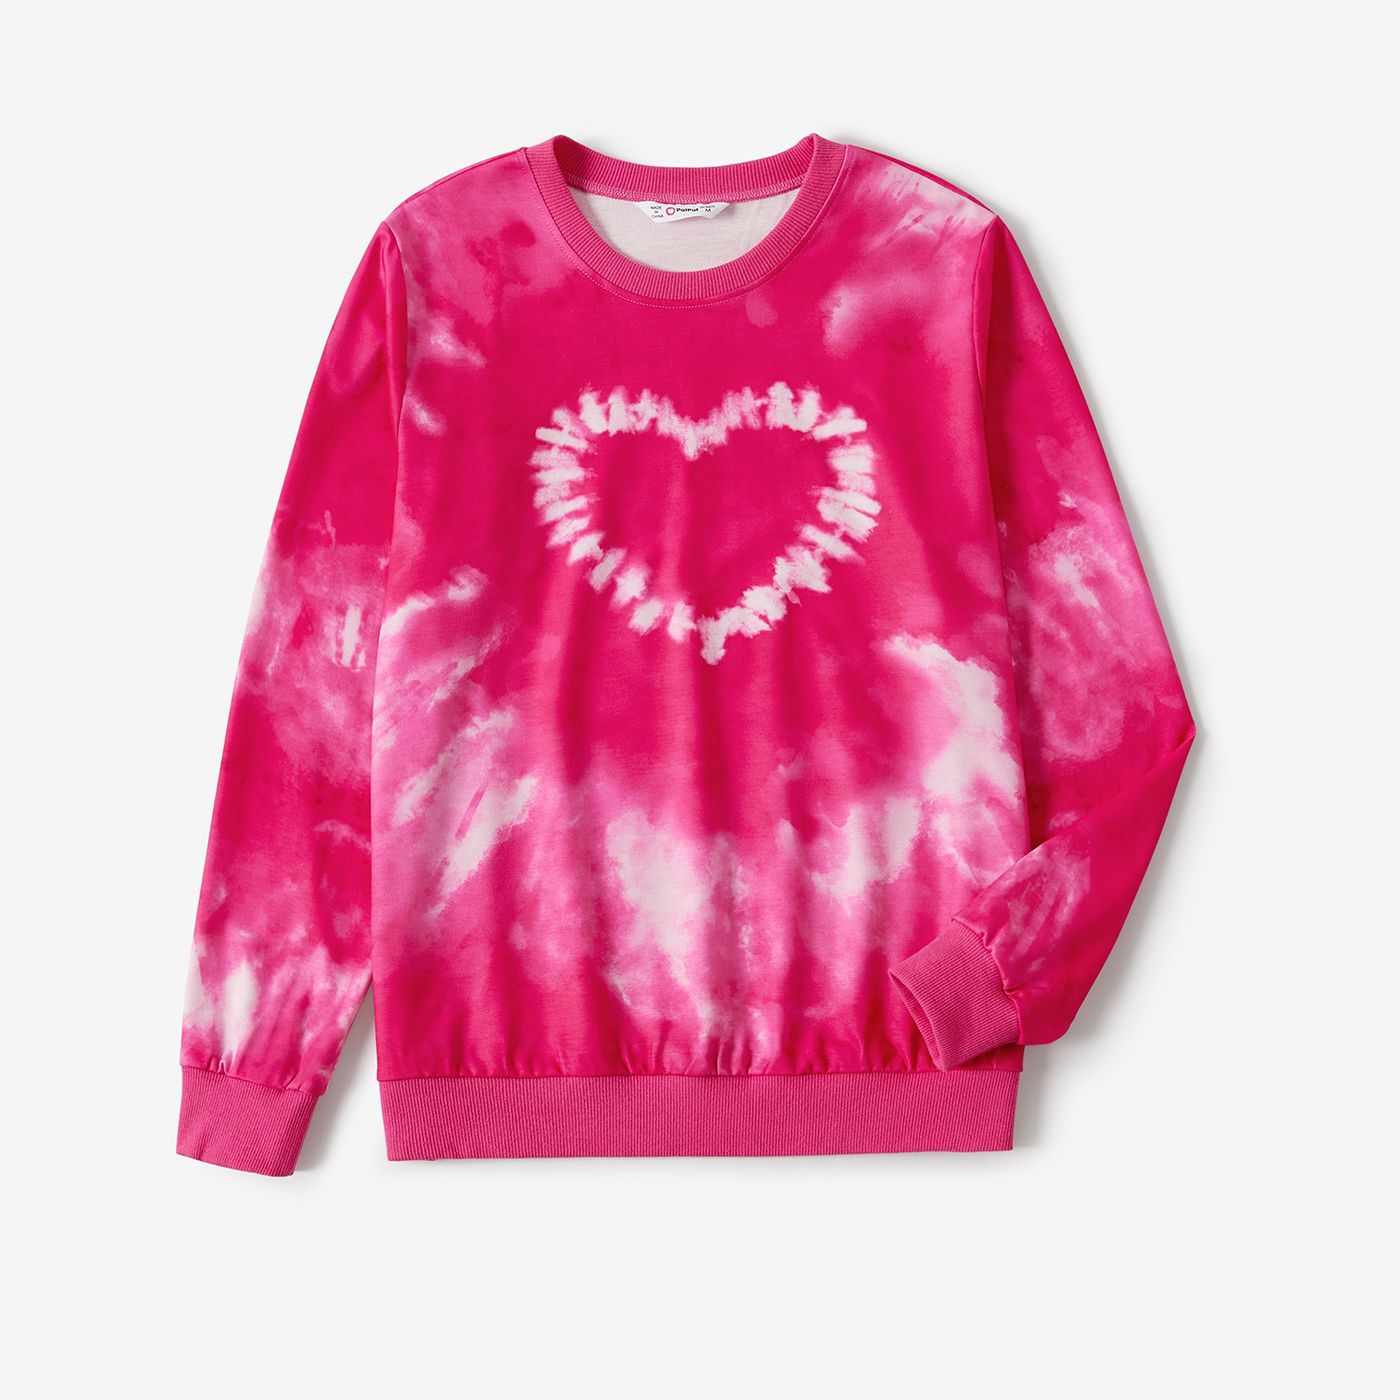 Saint-Valentin Maman Et Moi Sweet Pink Tie-dye Heart Print Tops à Manches Longues